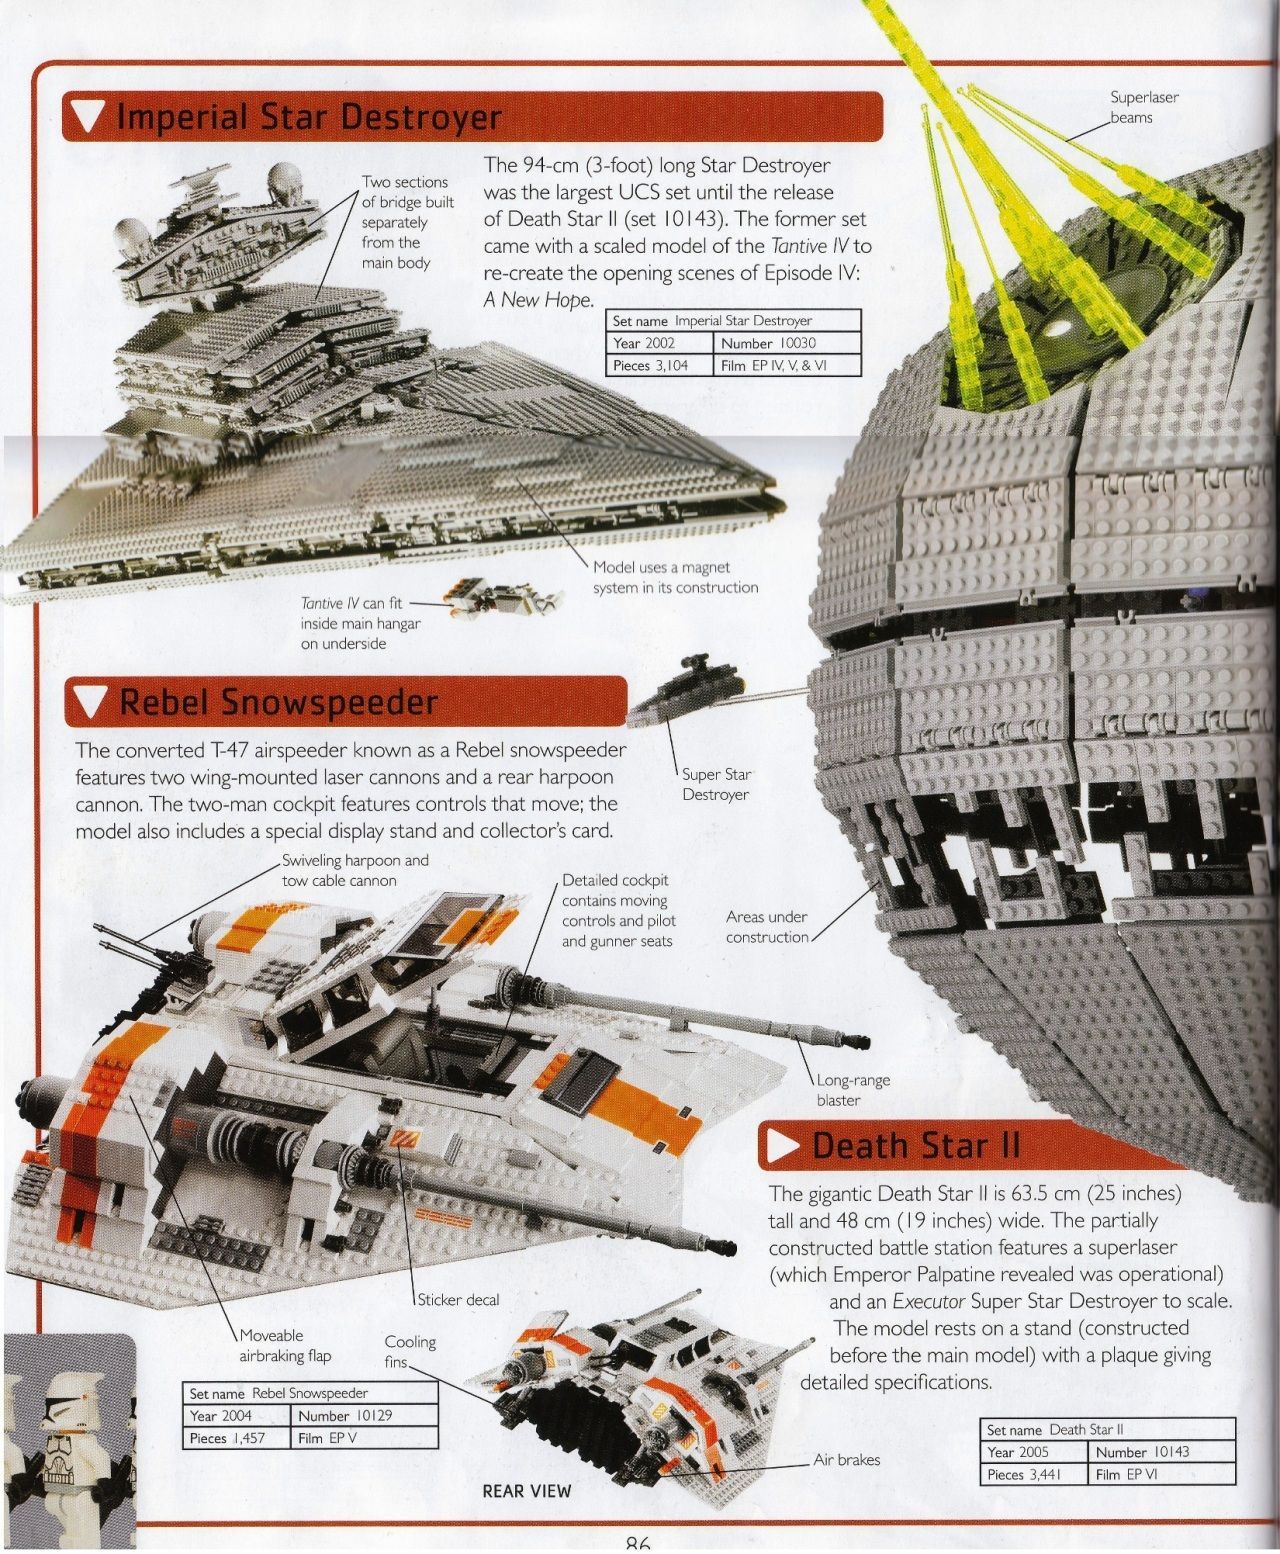 Lego Star Wars The Visual Dictionary 2009 Lego Star Wars The Visual Dictionary 2009 87